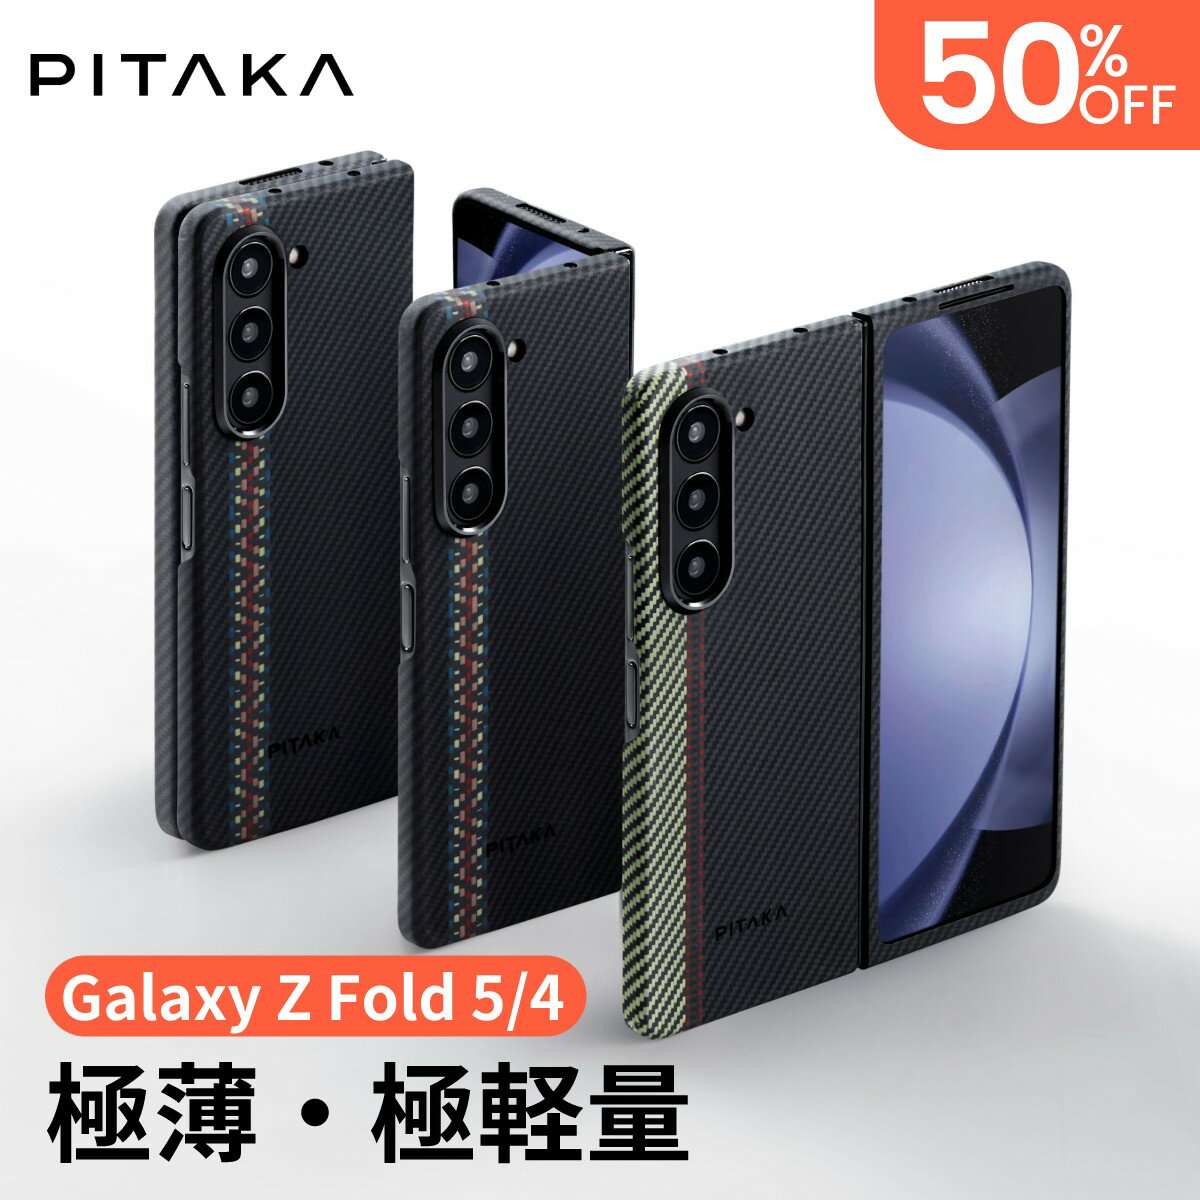 SS限定半額 Galaxy Z Fold 5 ケース Galaxy Z Fold4 5G ケース カバー ギャラクシー ゼット フォールド 5 4 おしゃれ メンズ PITAKA Air Case ワイヤレス充電 アラミド繊維 Sペン干渉無し 超薄 超軽量 かっこいい ビジネス 耐衝撃ケース SC-55C SCG16